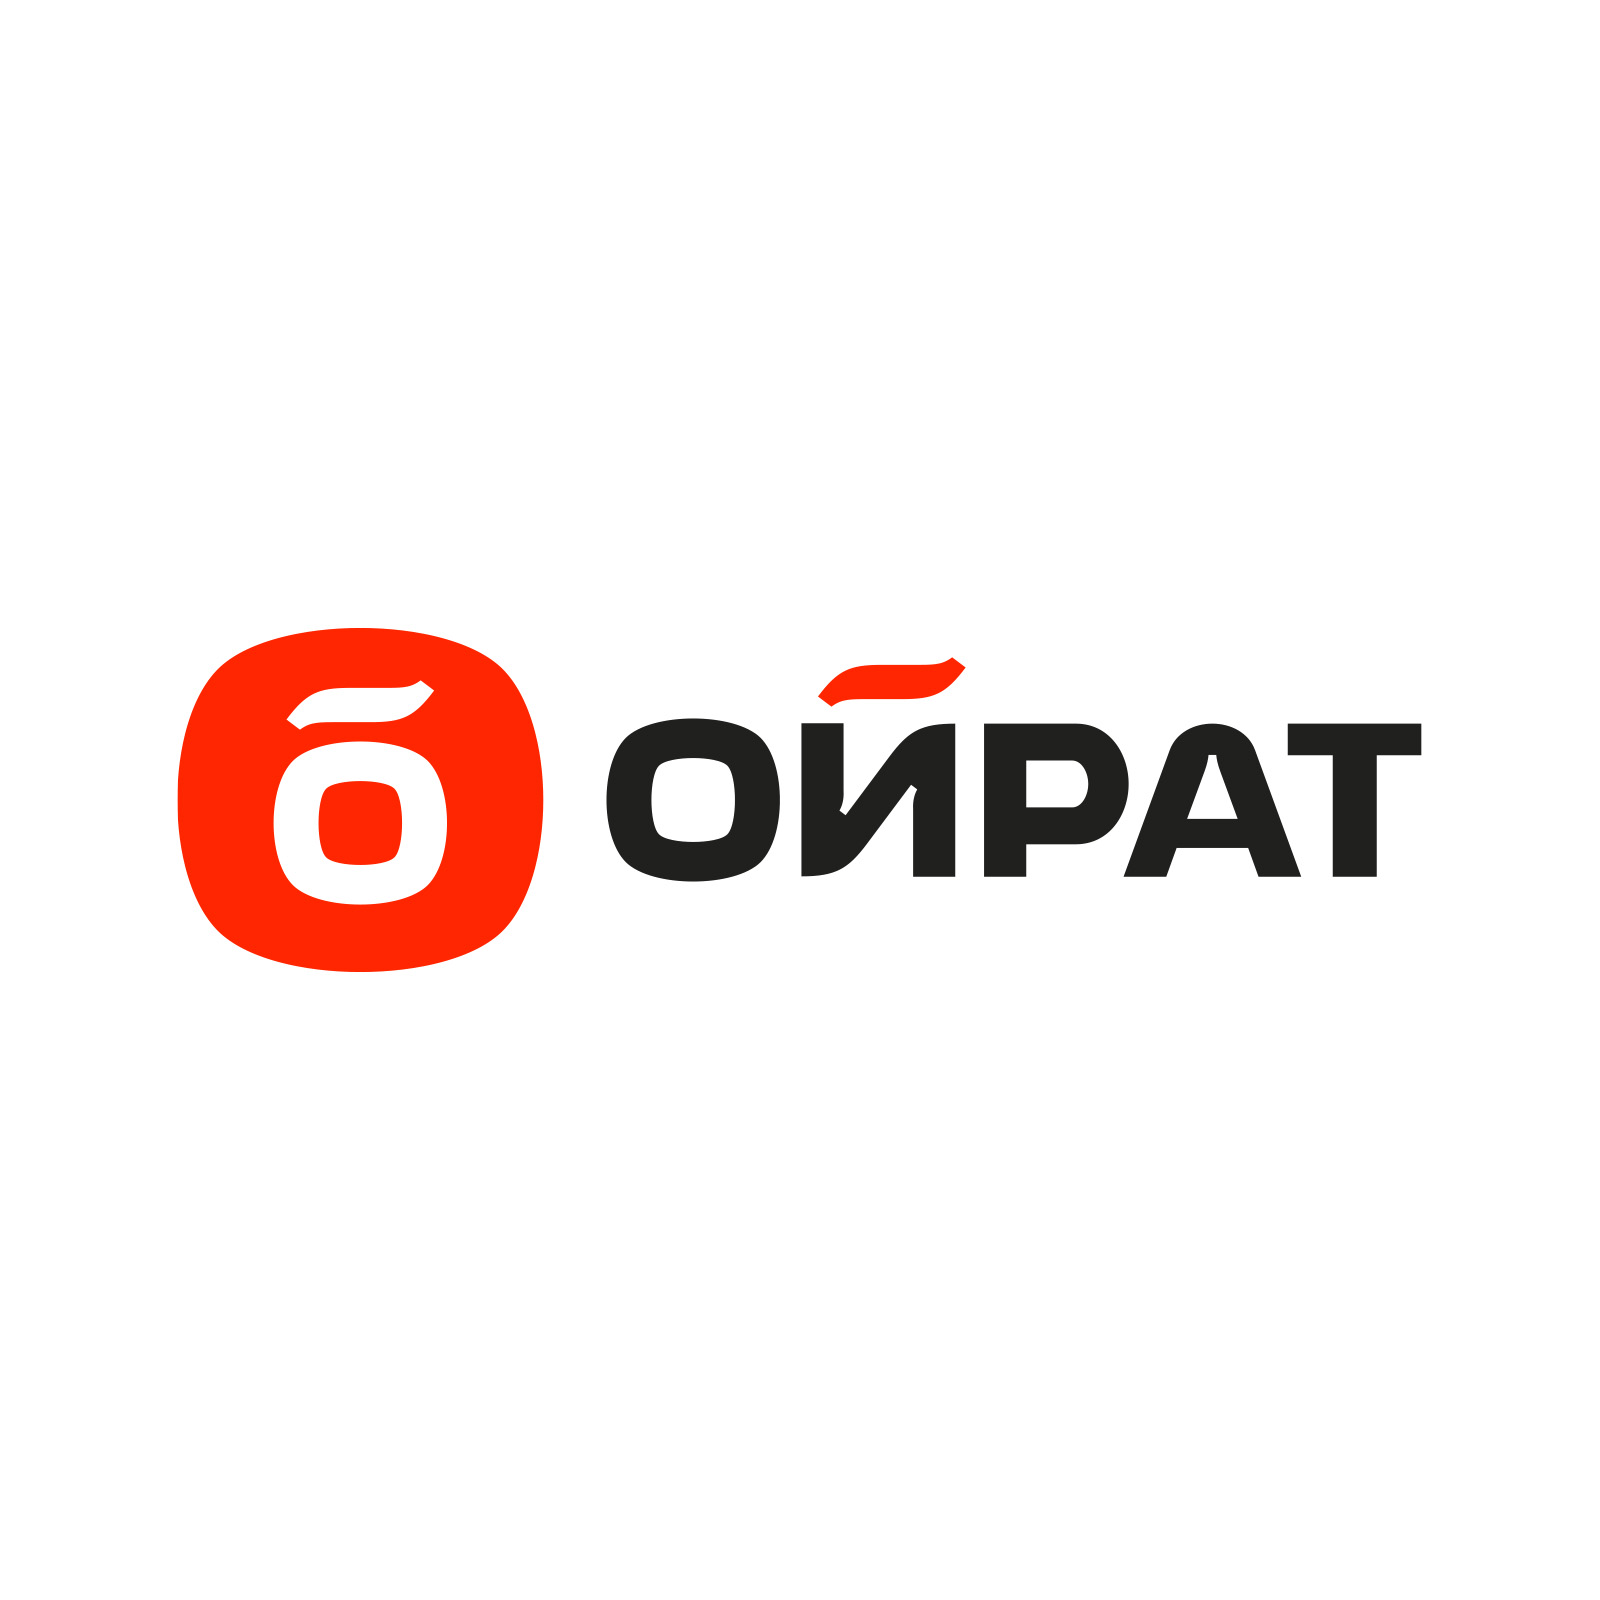 Oyrat logo design by logo designer Stanislav+Regis for your inspiration and for the worlds largest logo competition